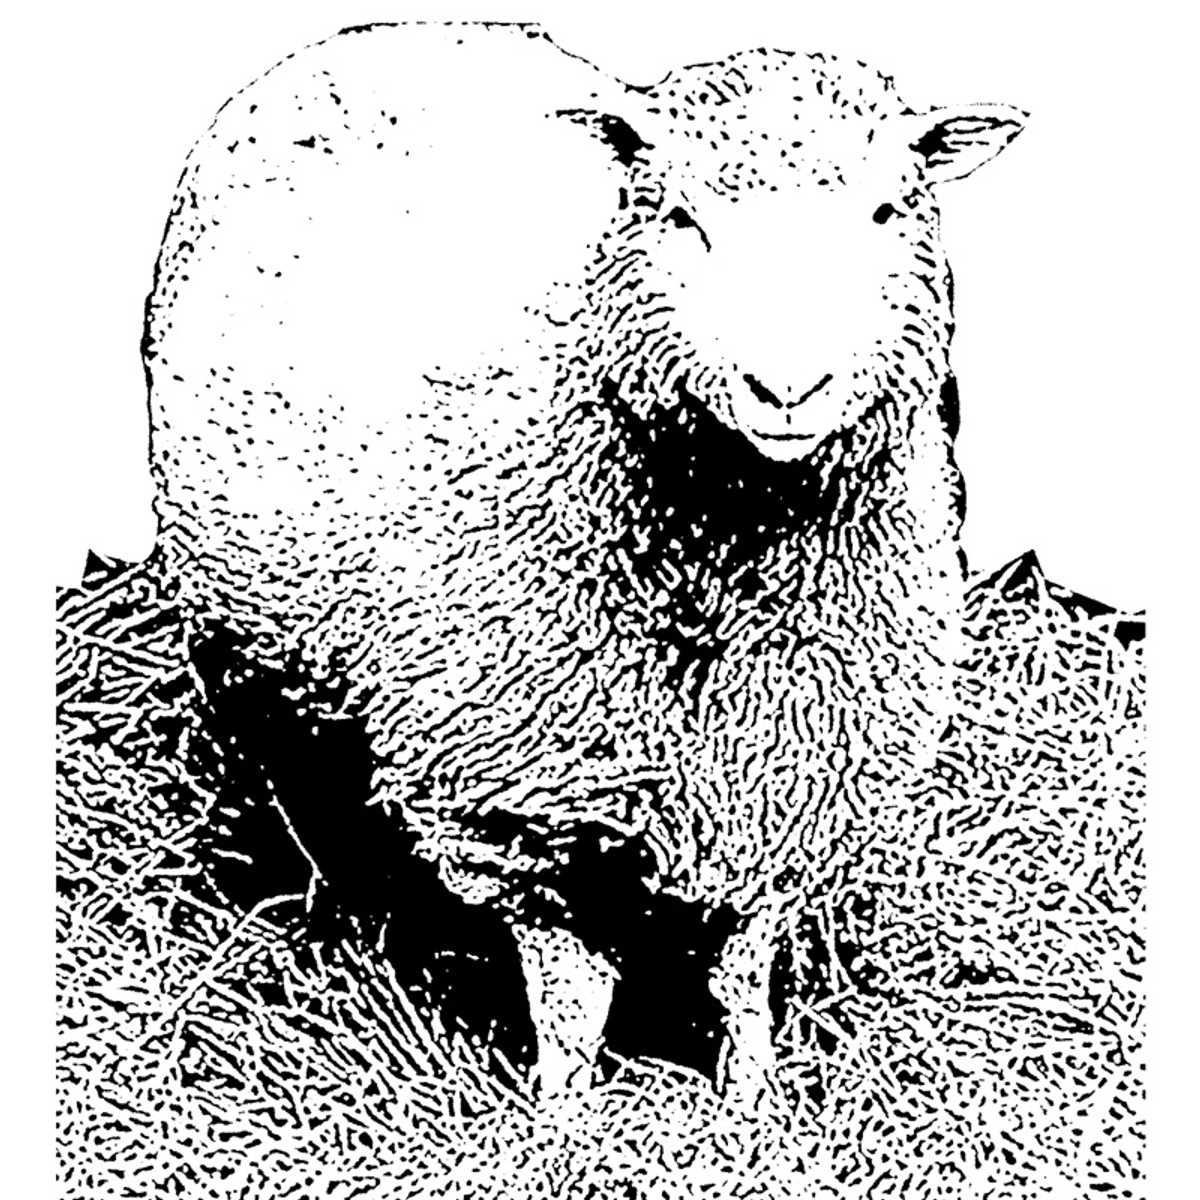 1997, Dolly, premier mouton cloné